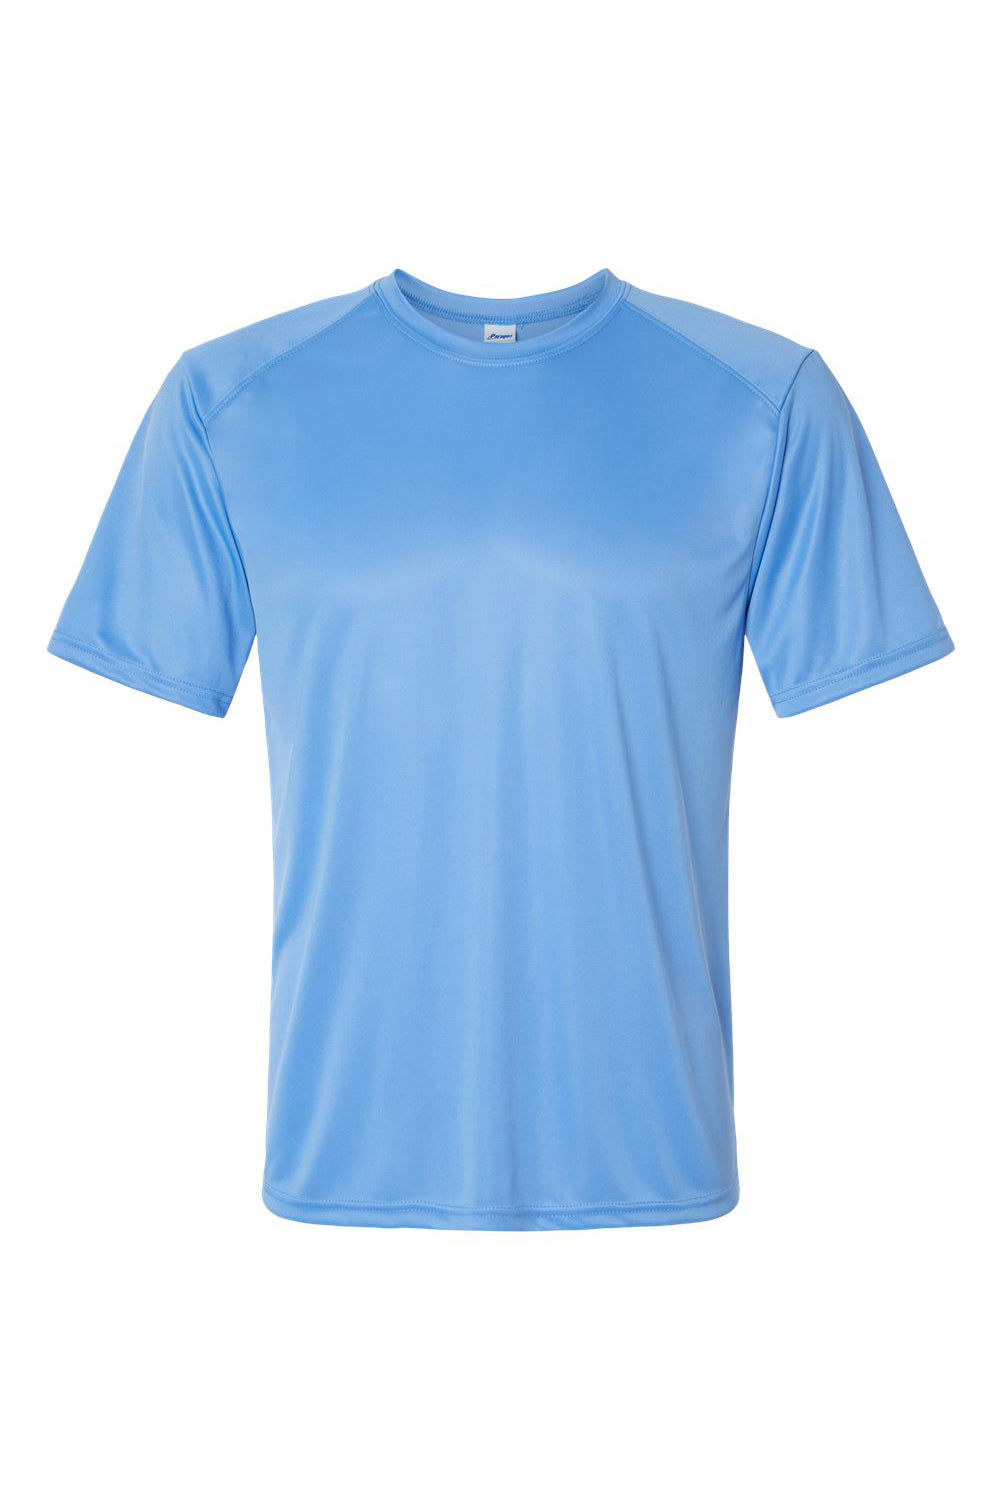 Paragon 200 Mens Islander Performance Short Sleeve Crewneck T-Shirt Bimini Blue Flat Front